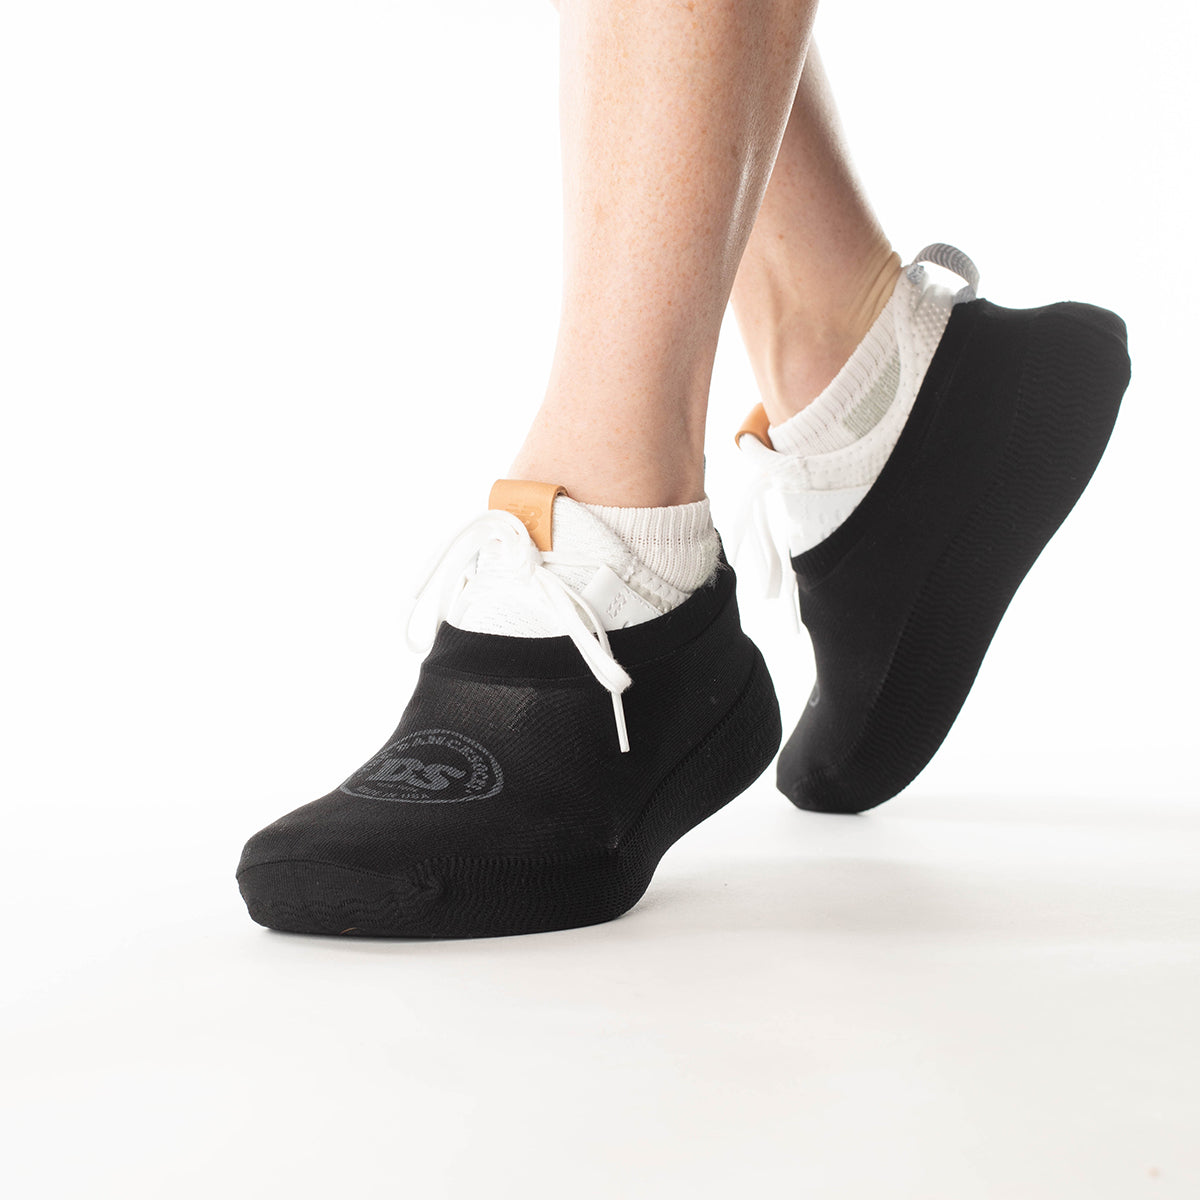 THE DANCESOCKS® - Made in USA Original Dance Socks for Carpeted